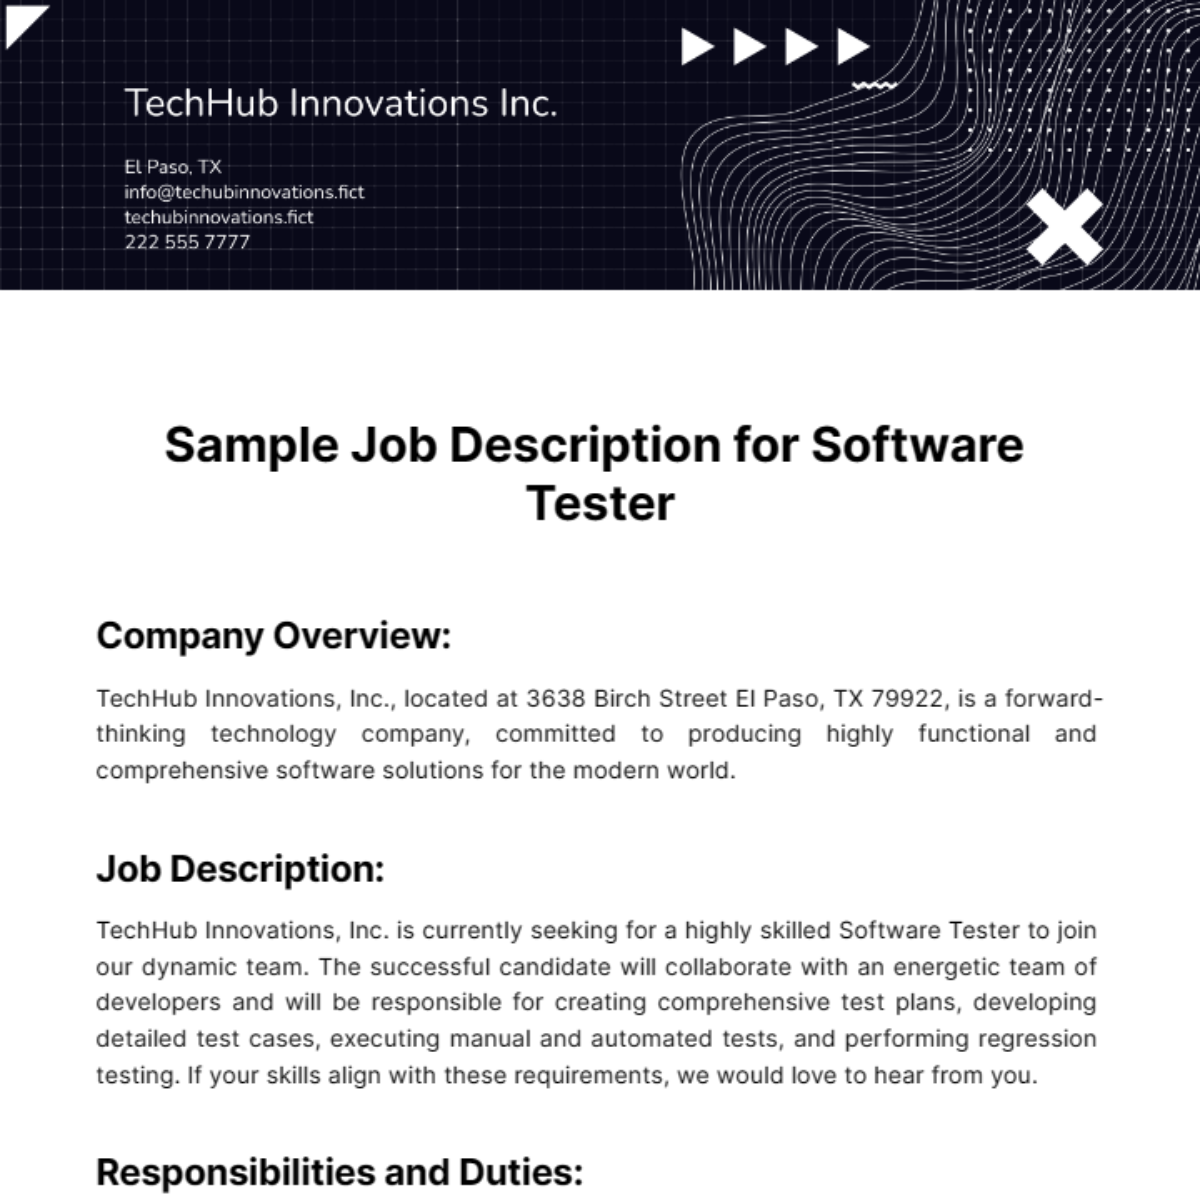 Sample Job Description for Software Tester Template